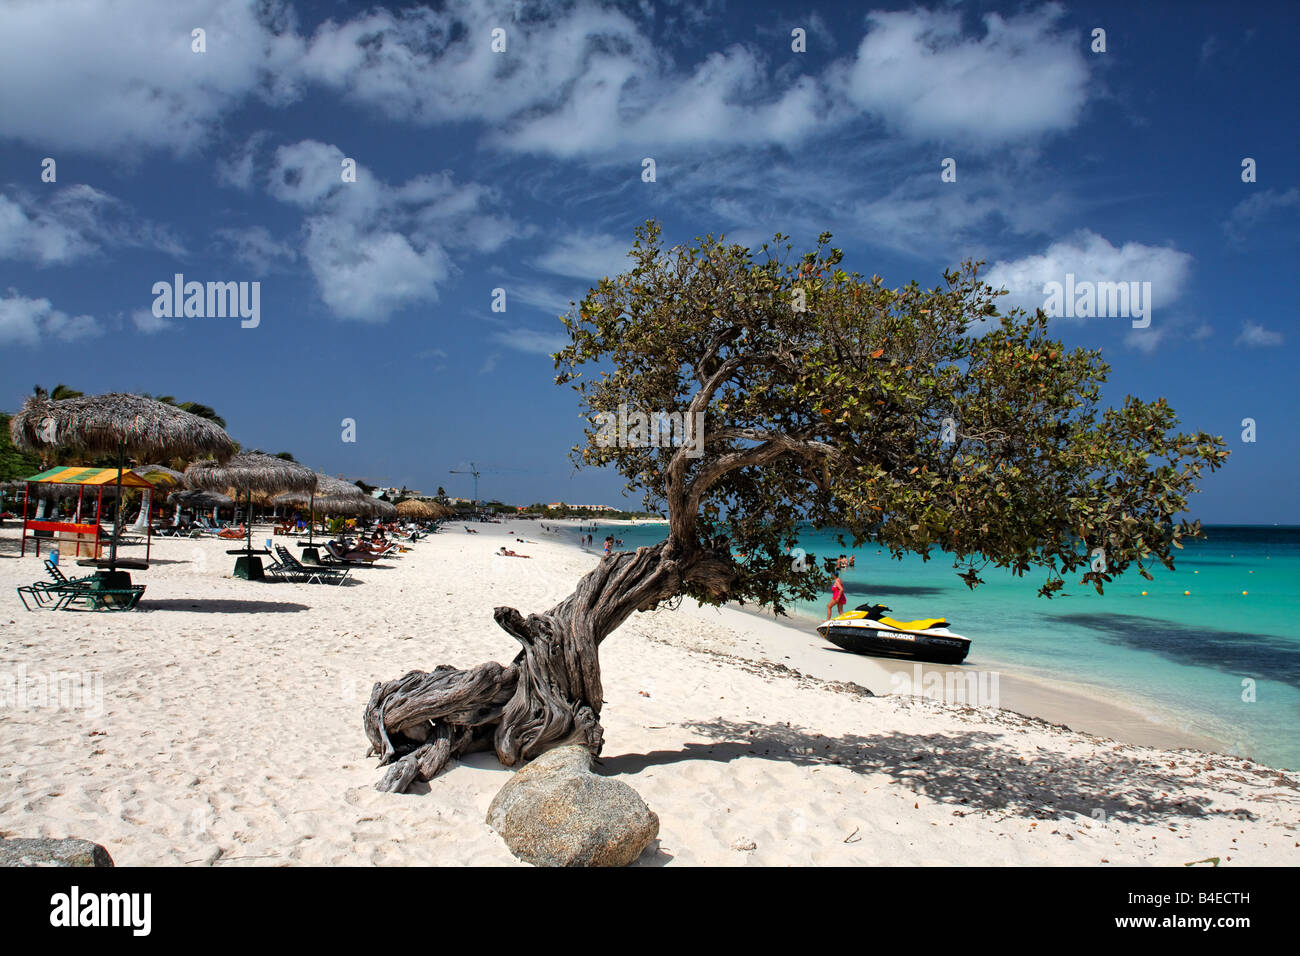 Aruba Antille Olandesi Eagle beach, Foto Stock